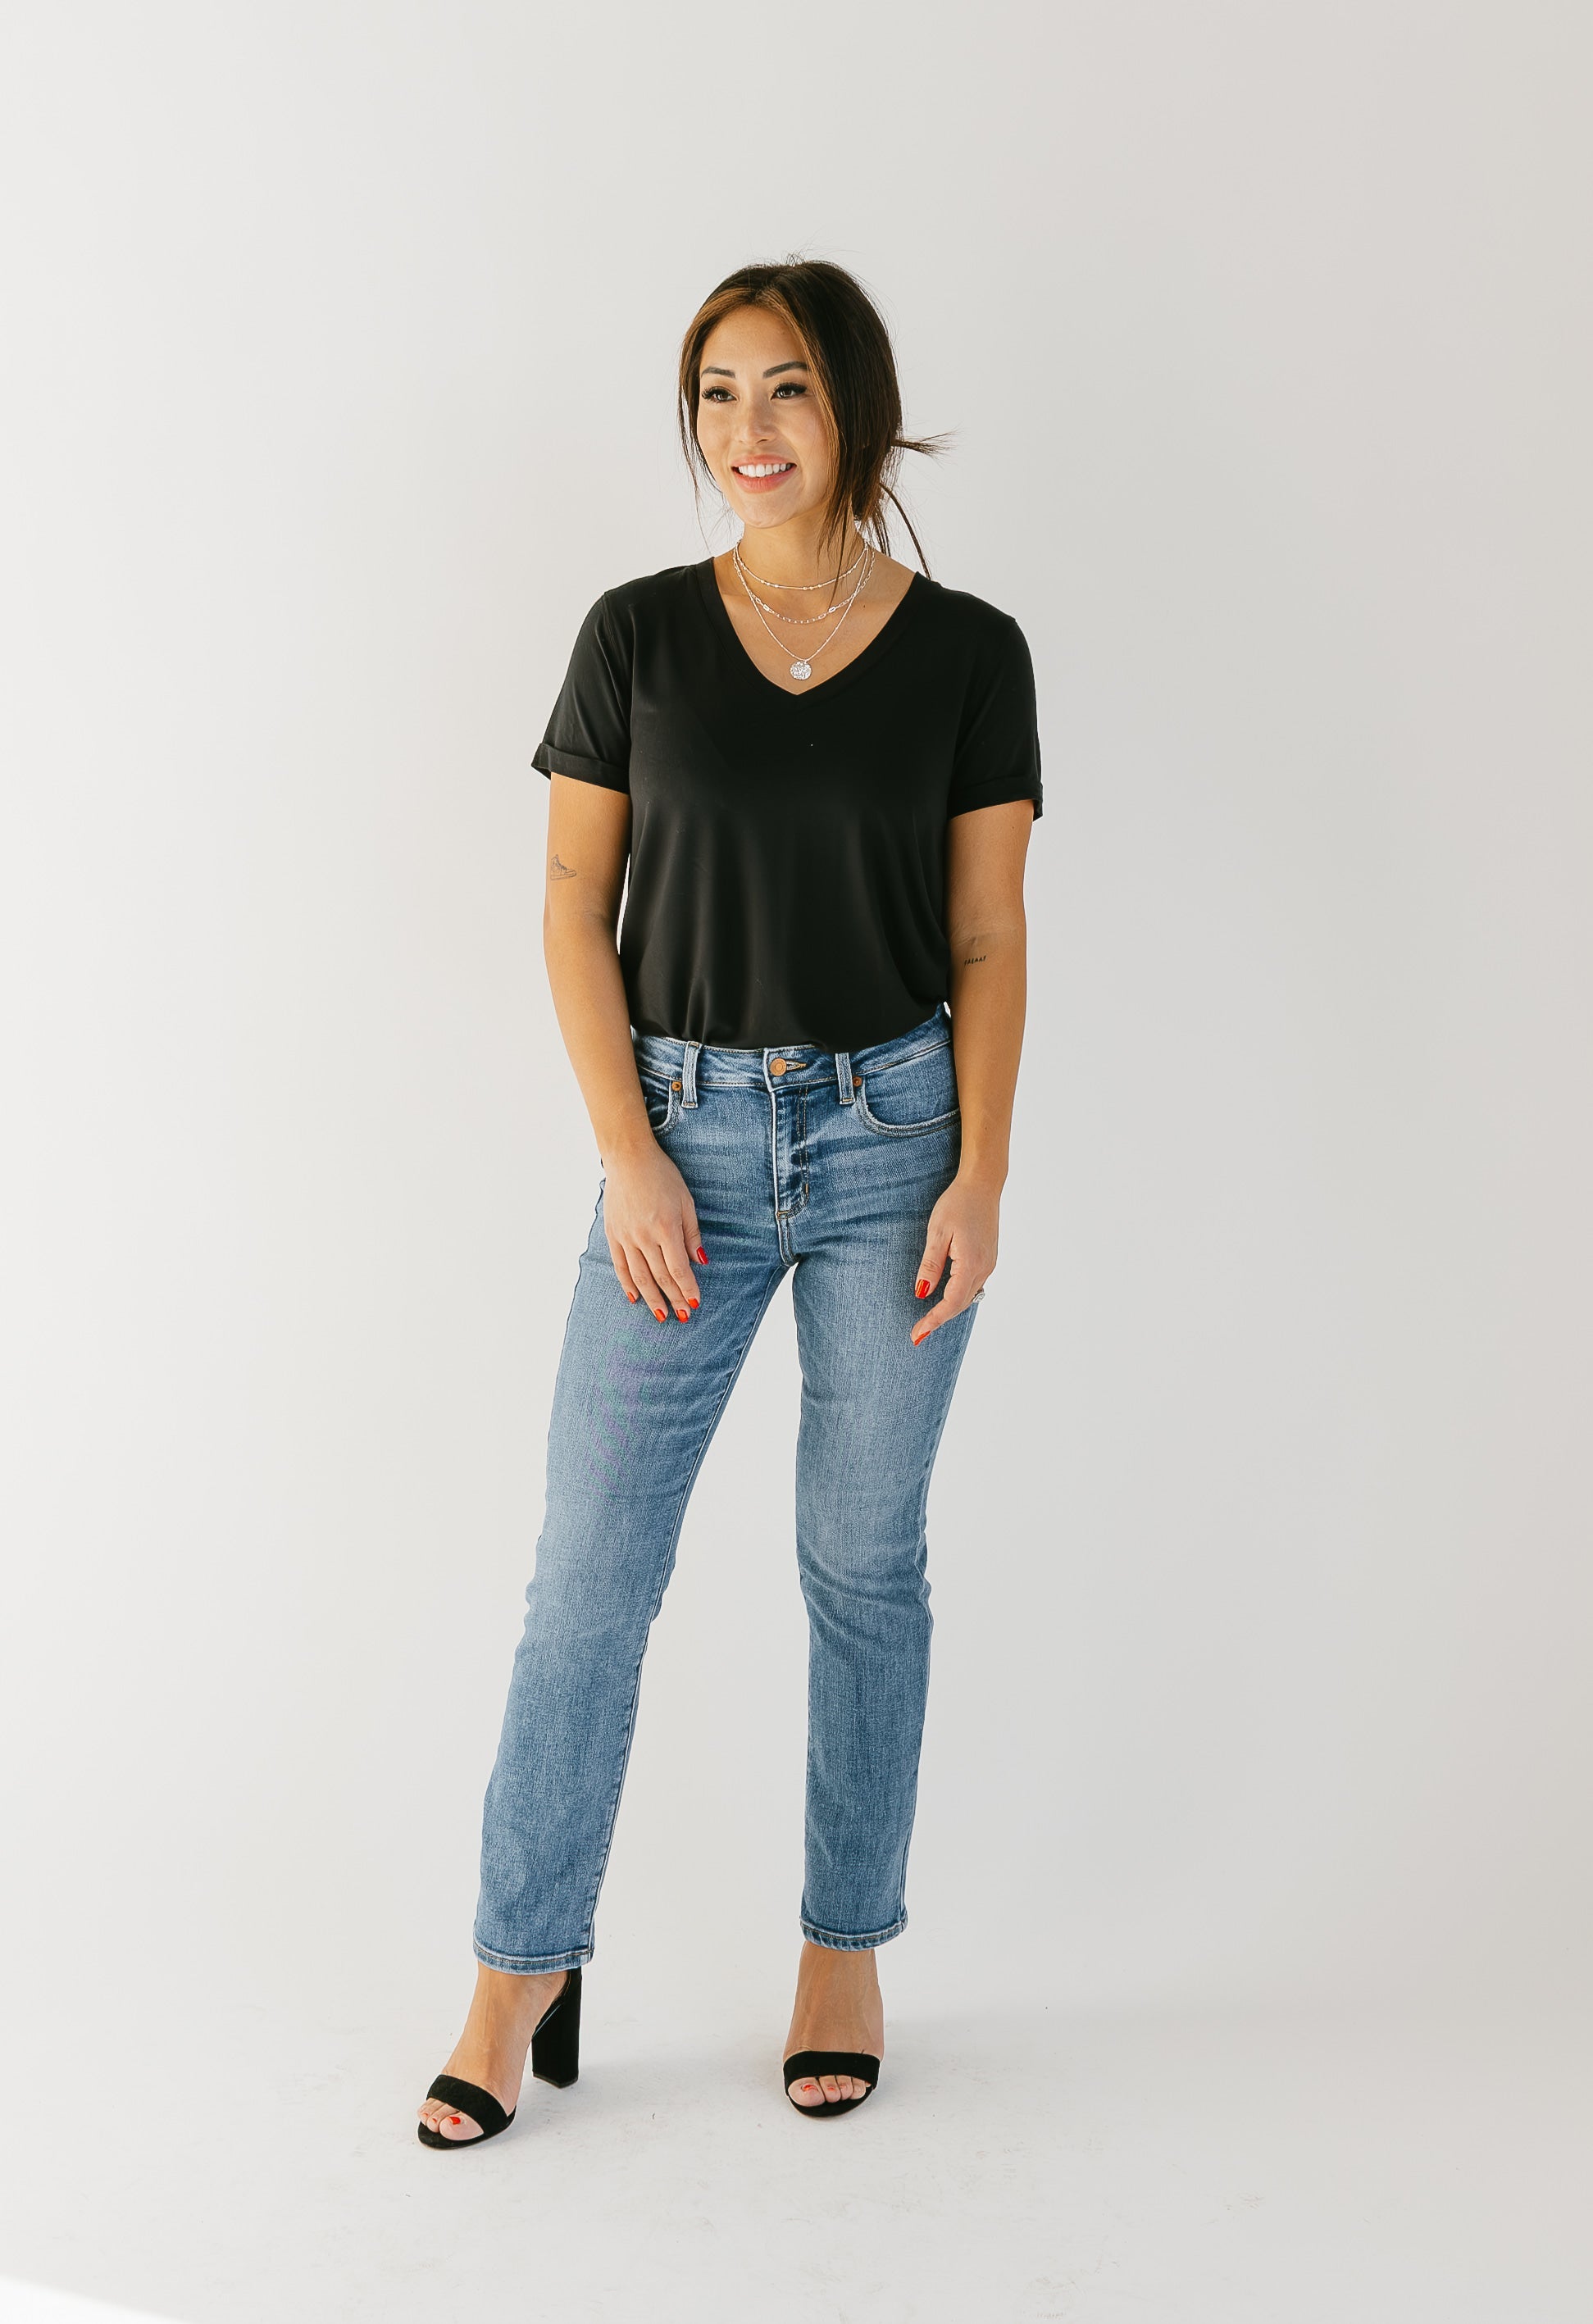 Ferris Jeans - MEDIUM LIGHT - willows clothing Straight Leg